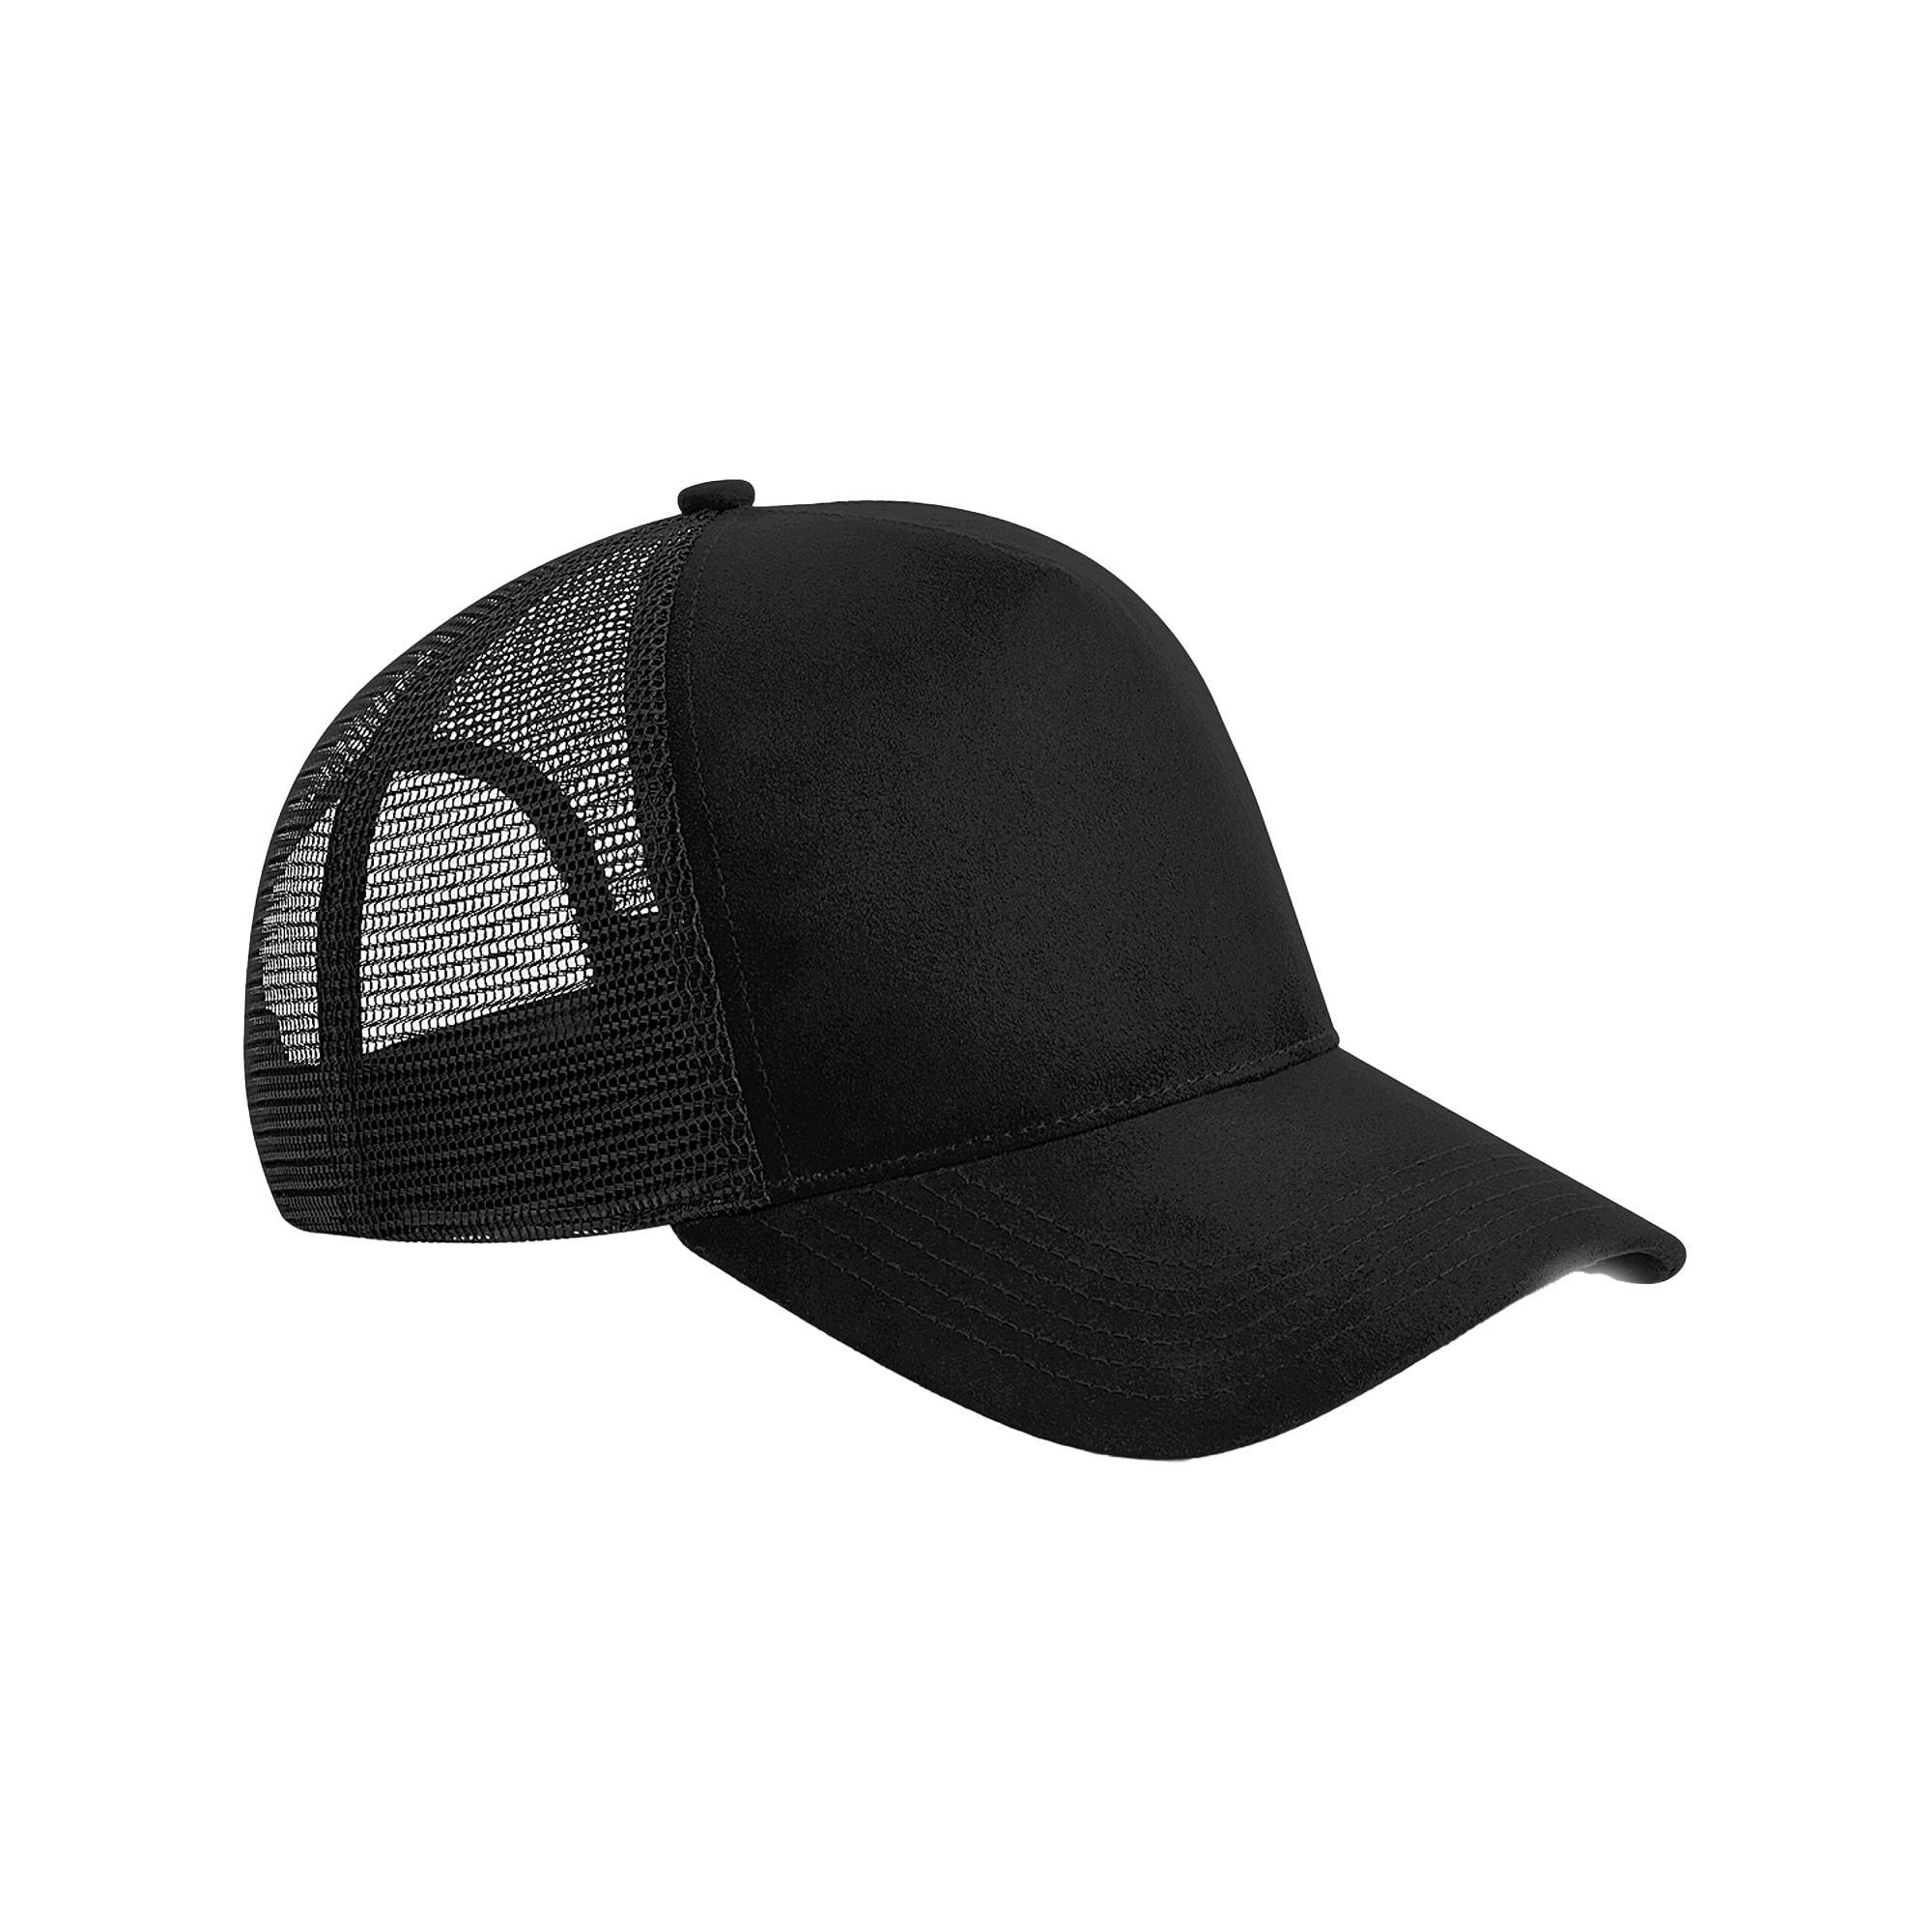 Beechfield Unisex Adult Suede Snapback Trucker Cap (Black) (One Size)